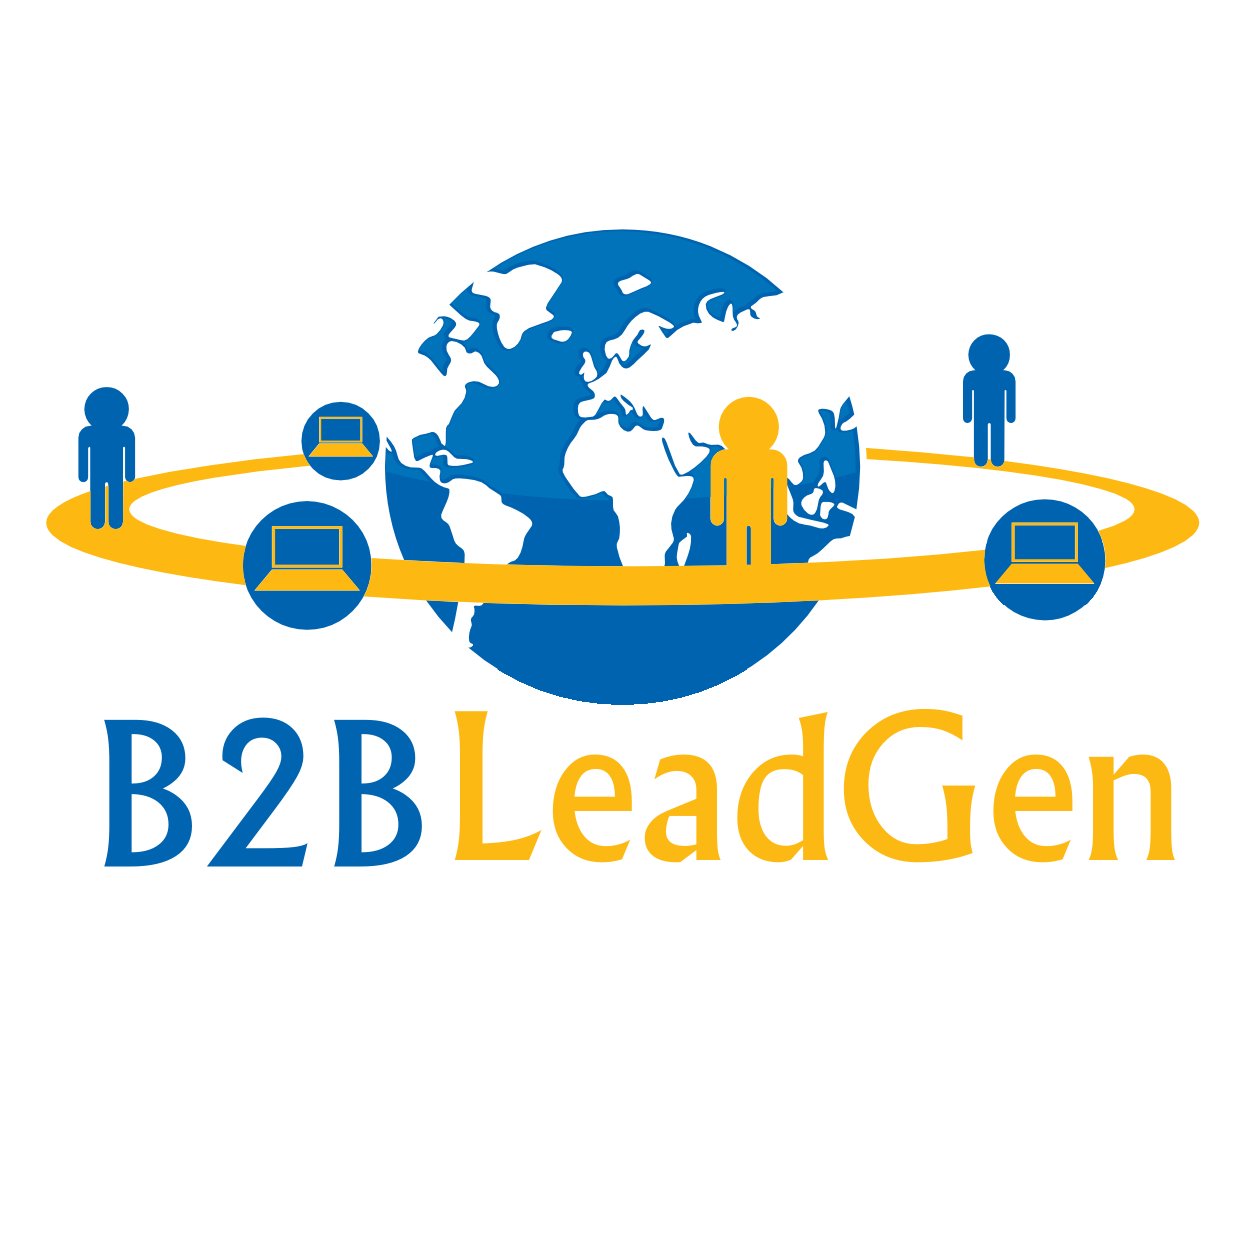 #B2B #leadGeneration #DemandGenenration
#ContentSyndication
#MQL #SQL #Bant #ABM
#B2BCalling
#OutboundLeads
#EmailMarketing